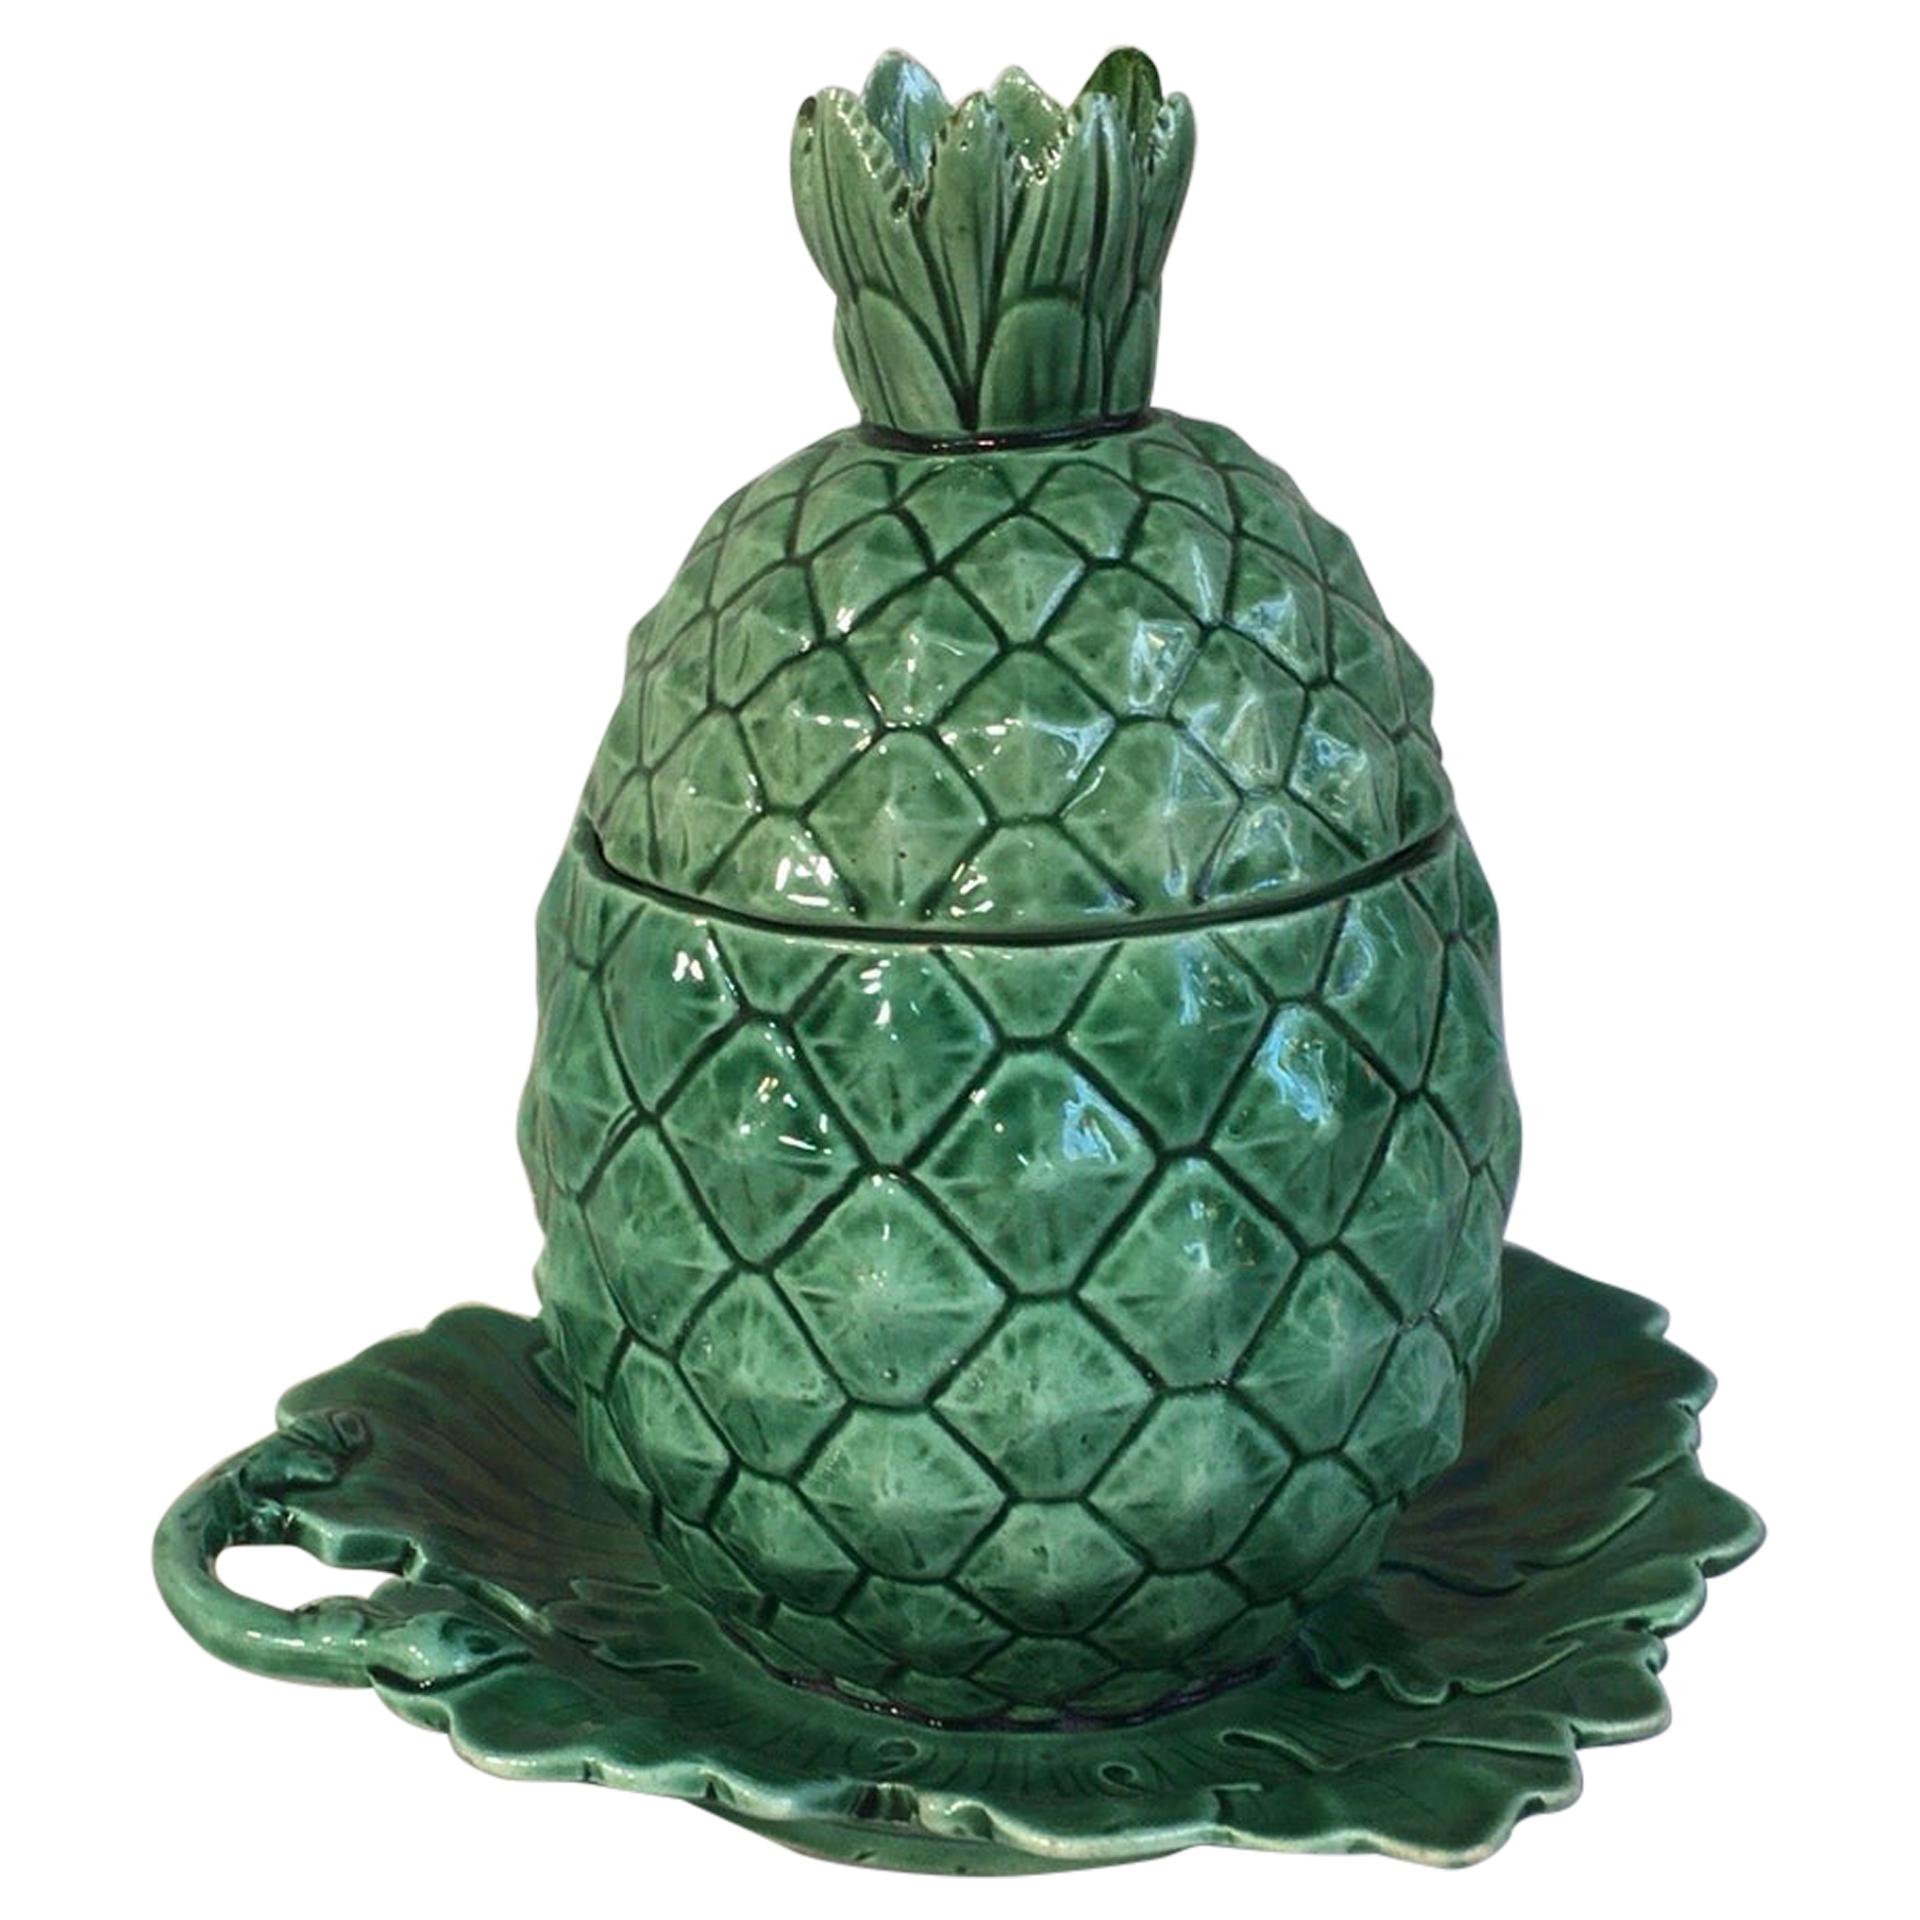 Rare Green Majolica Pineapple Tureen, Circa 1880